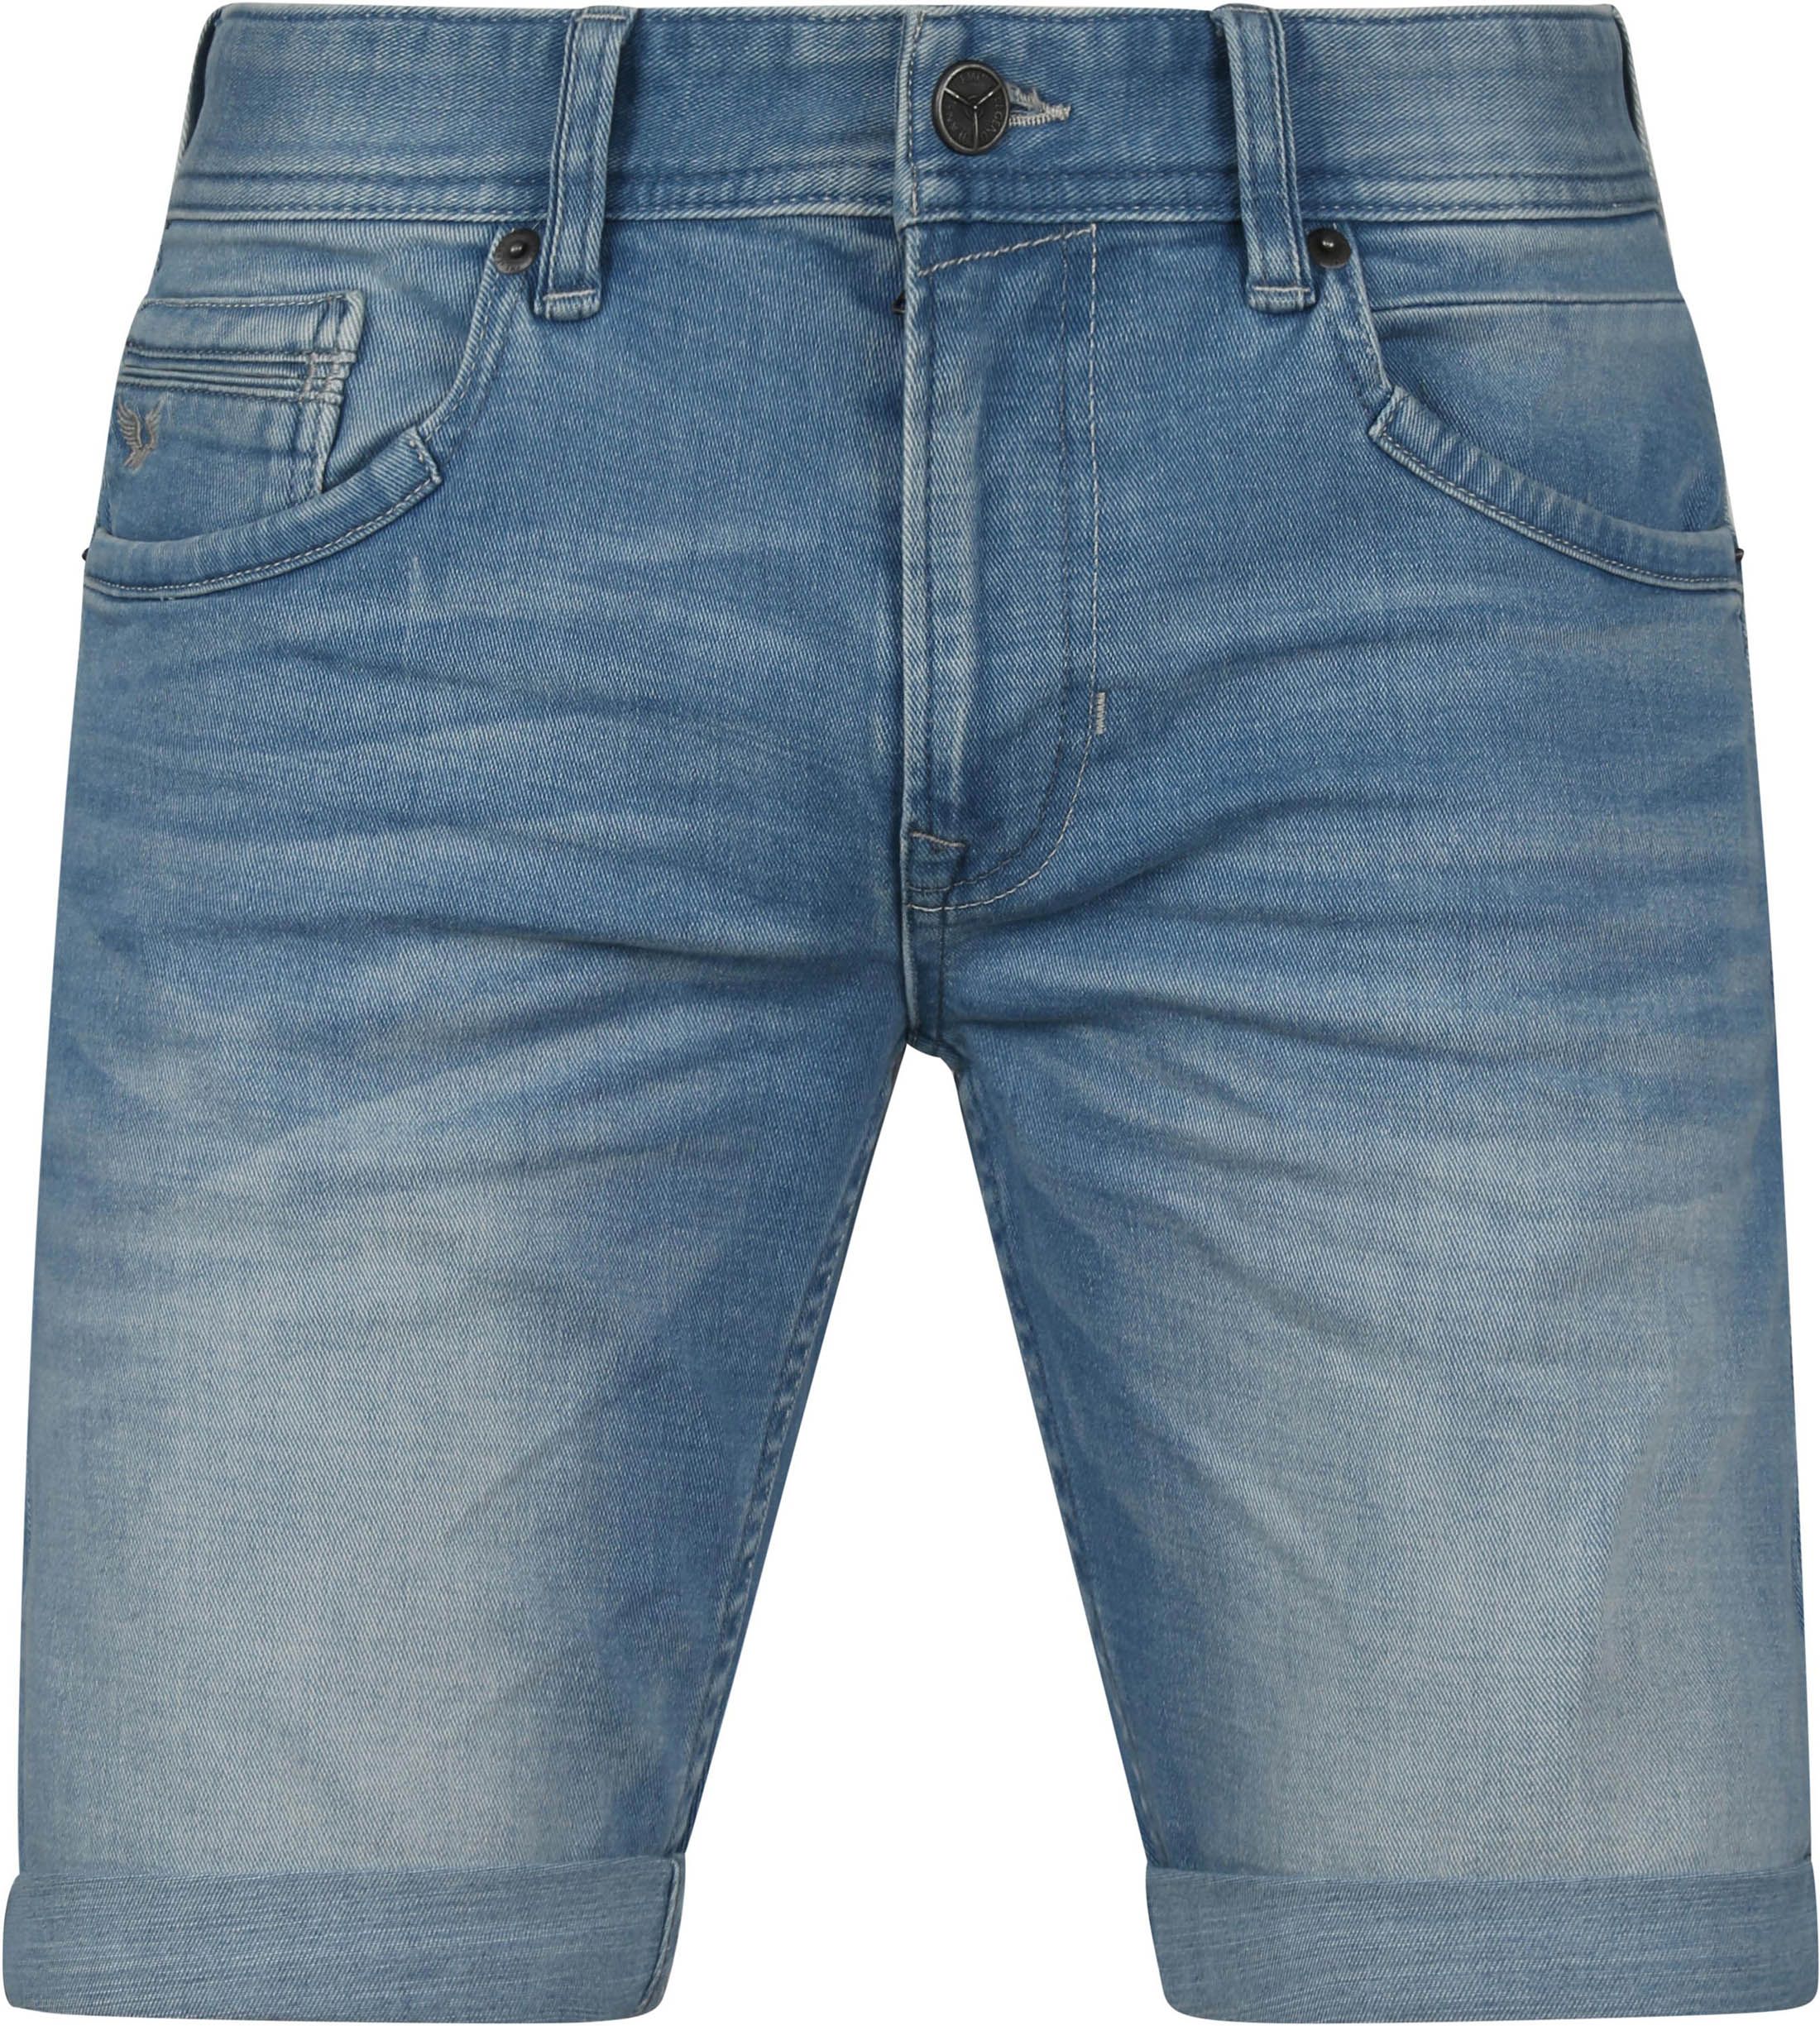 PME Legend Tailwheel Shorts Blue size 36